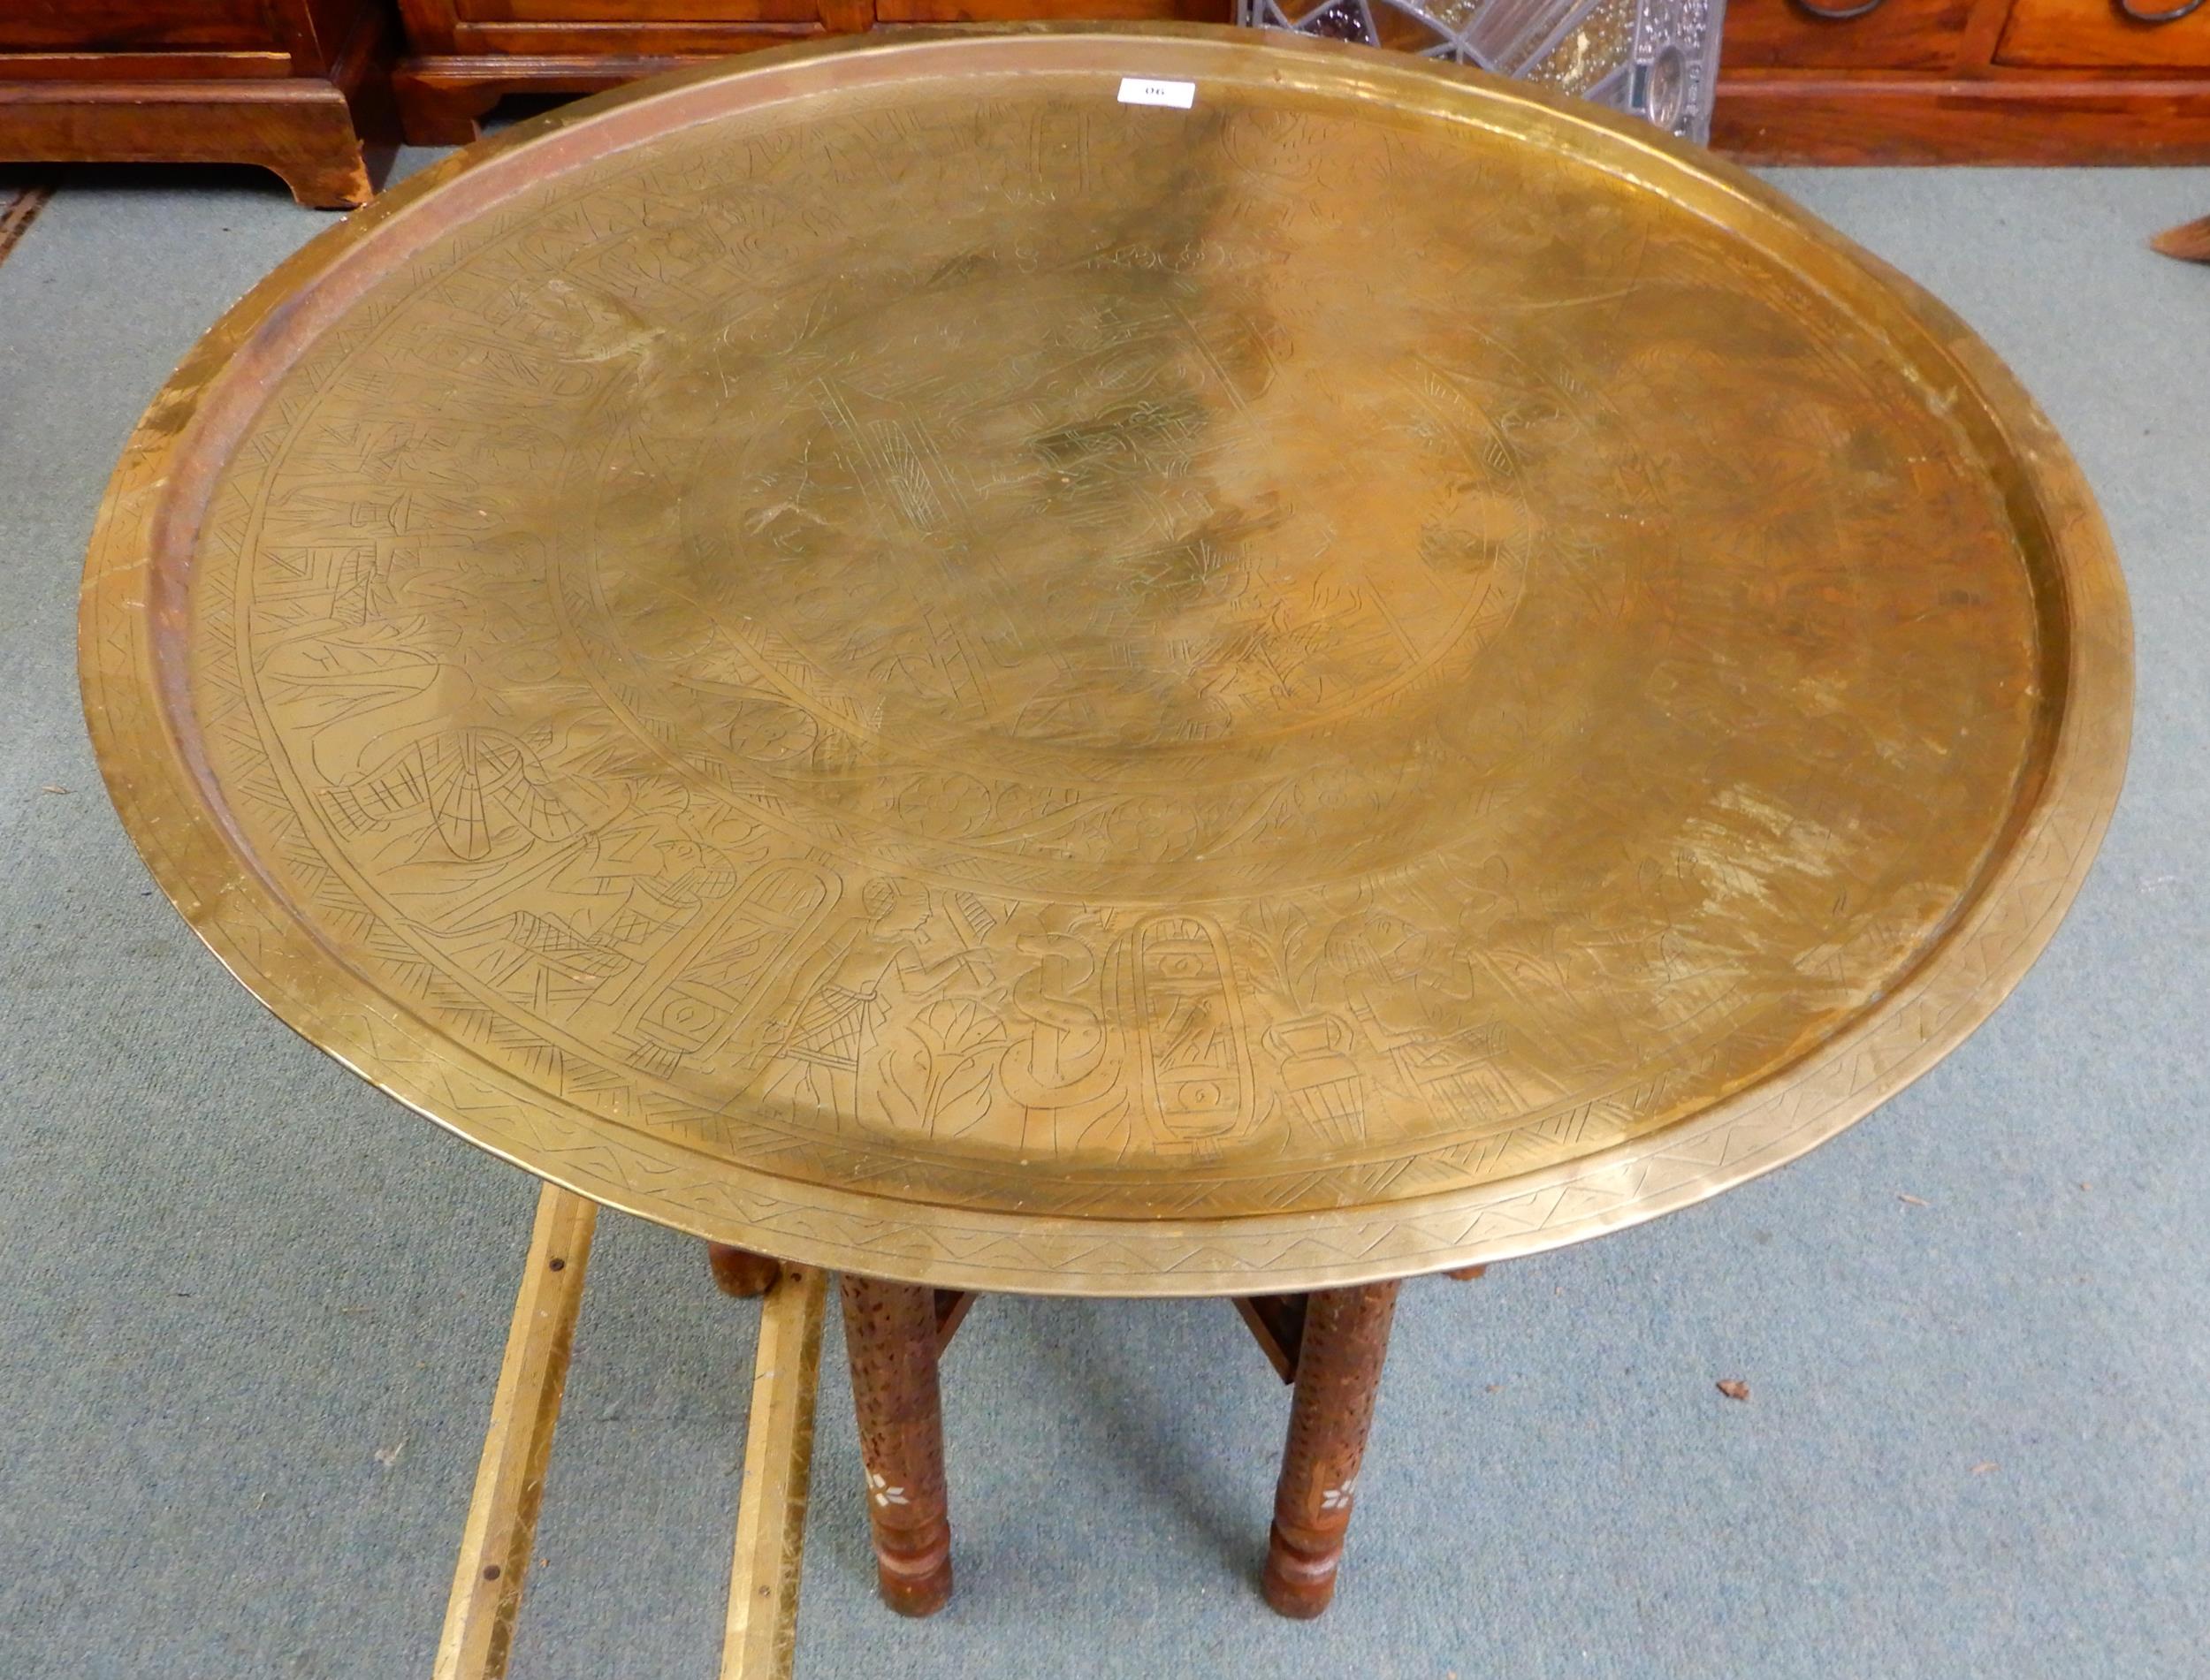 A 20th century circular brass topped Moorish folding table with bone inlaid folding base, 58cm